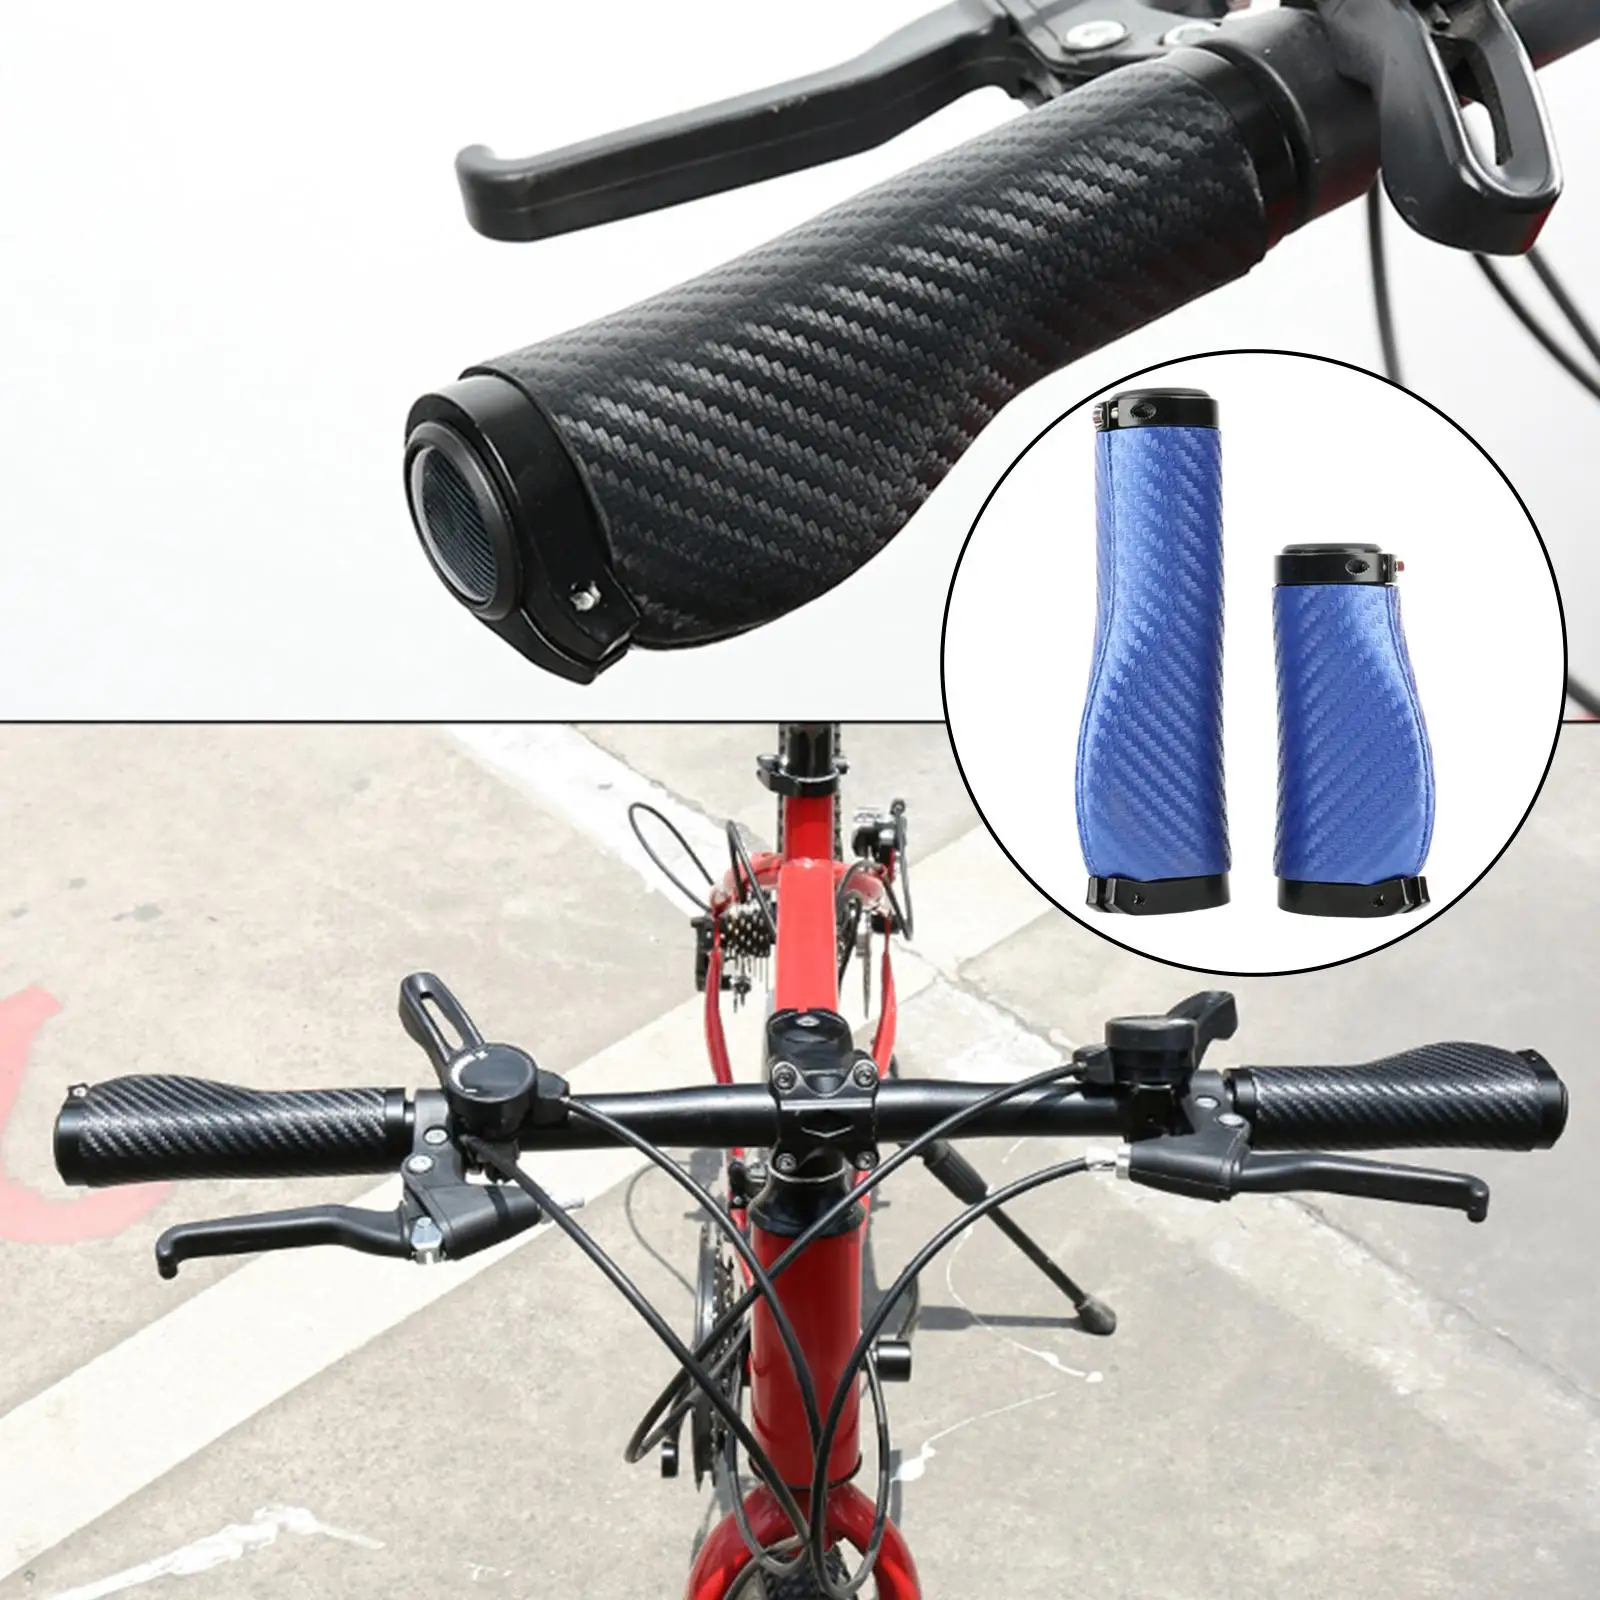 2 Pieces Universal Mountain Bike Handlebar Grips Carbon Fiber Pattern Lockable Non Slip Ergonomic Bar Grips for Scooter Riding